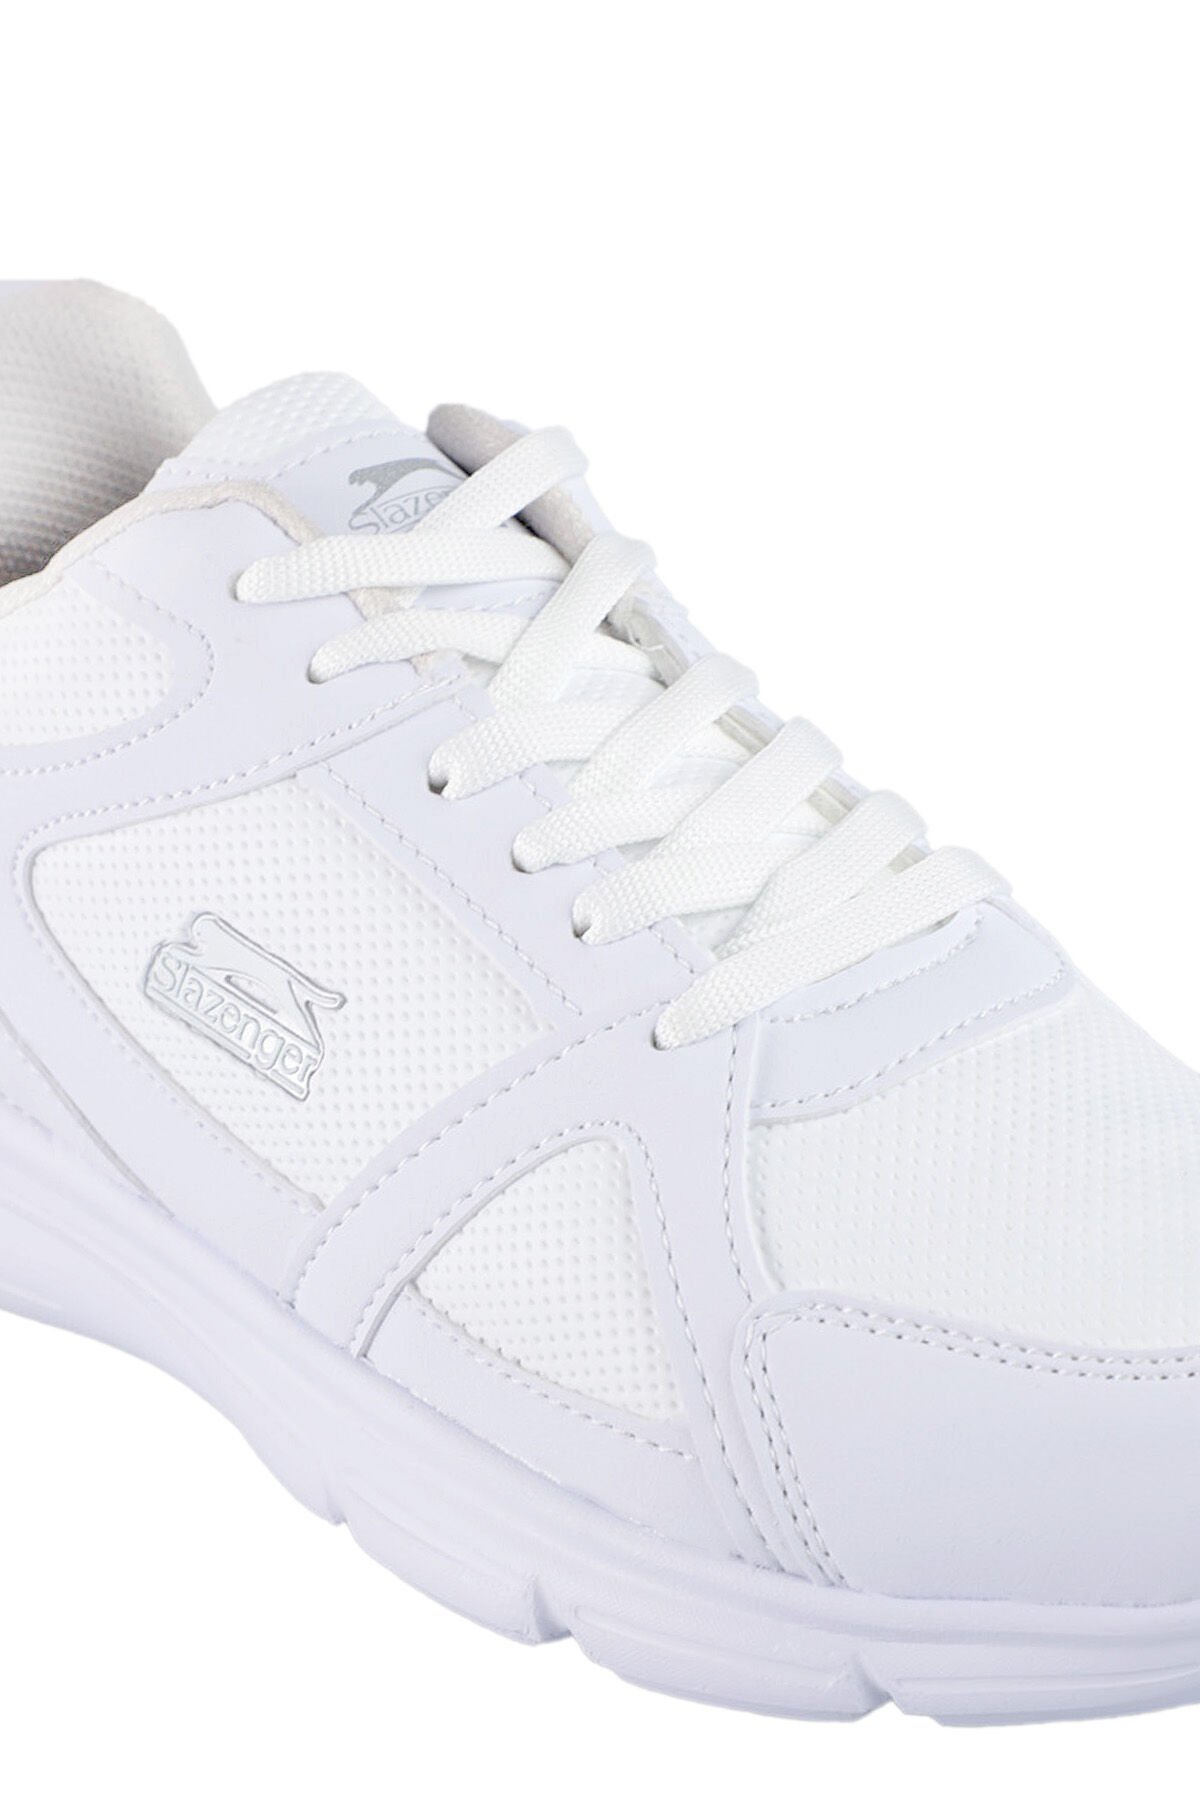 Slazenger PERA Sneaker Erkek Ayakkabı Beyaz - Thumbnail